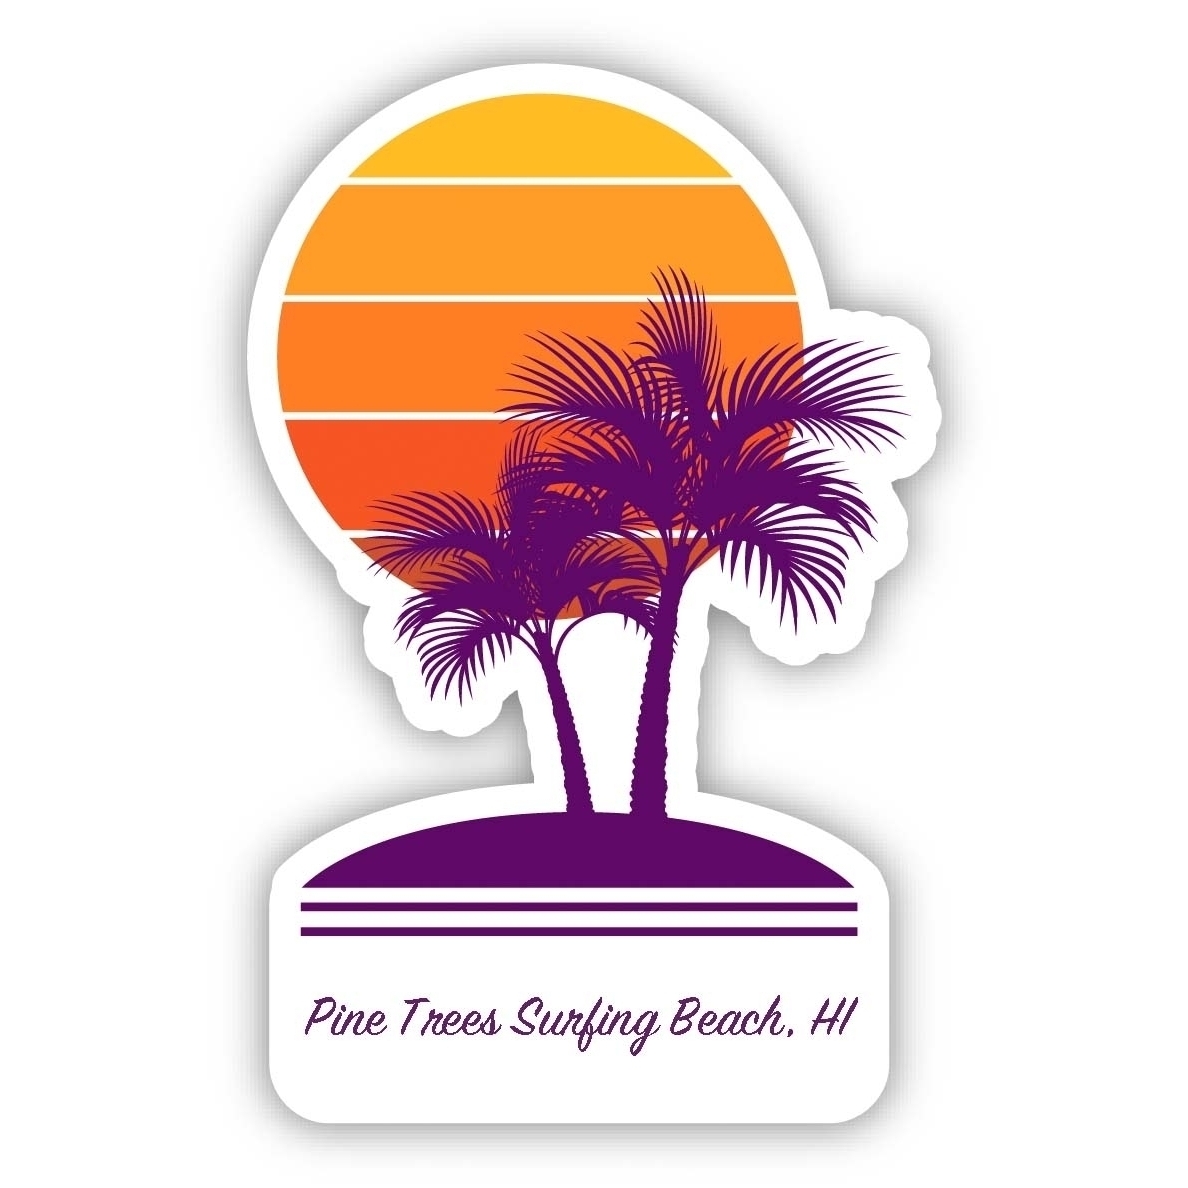 Pine Trees Surfing Beach Hawaii Souvenir 4 Inch Vinyl Decal Sticker Palm Design